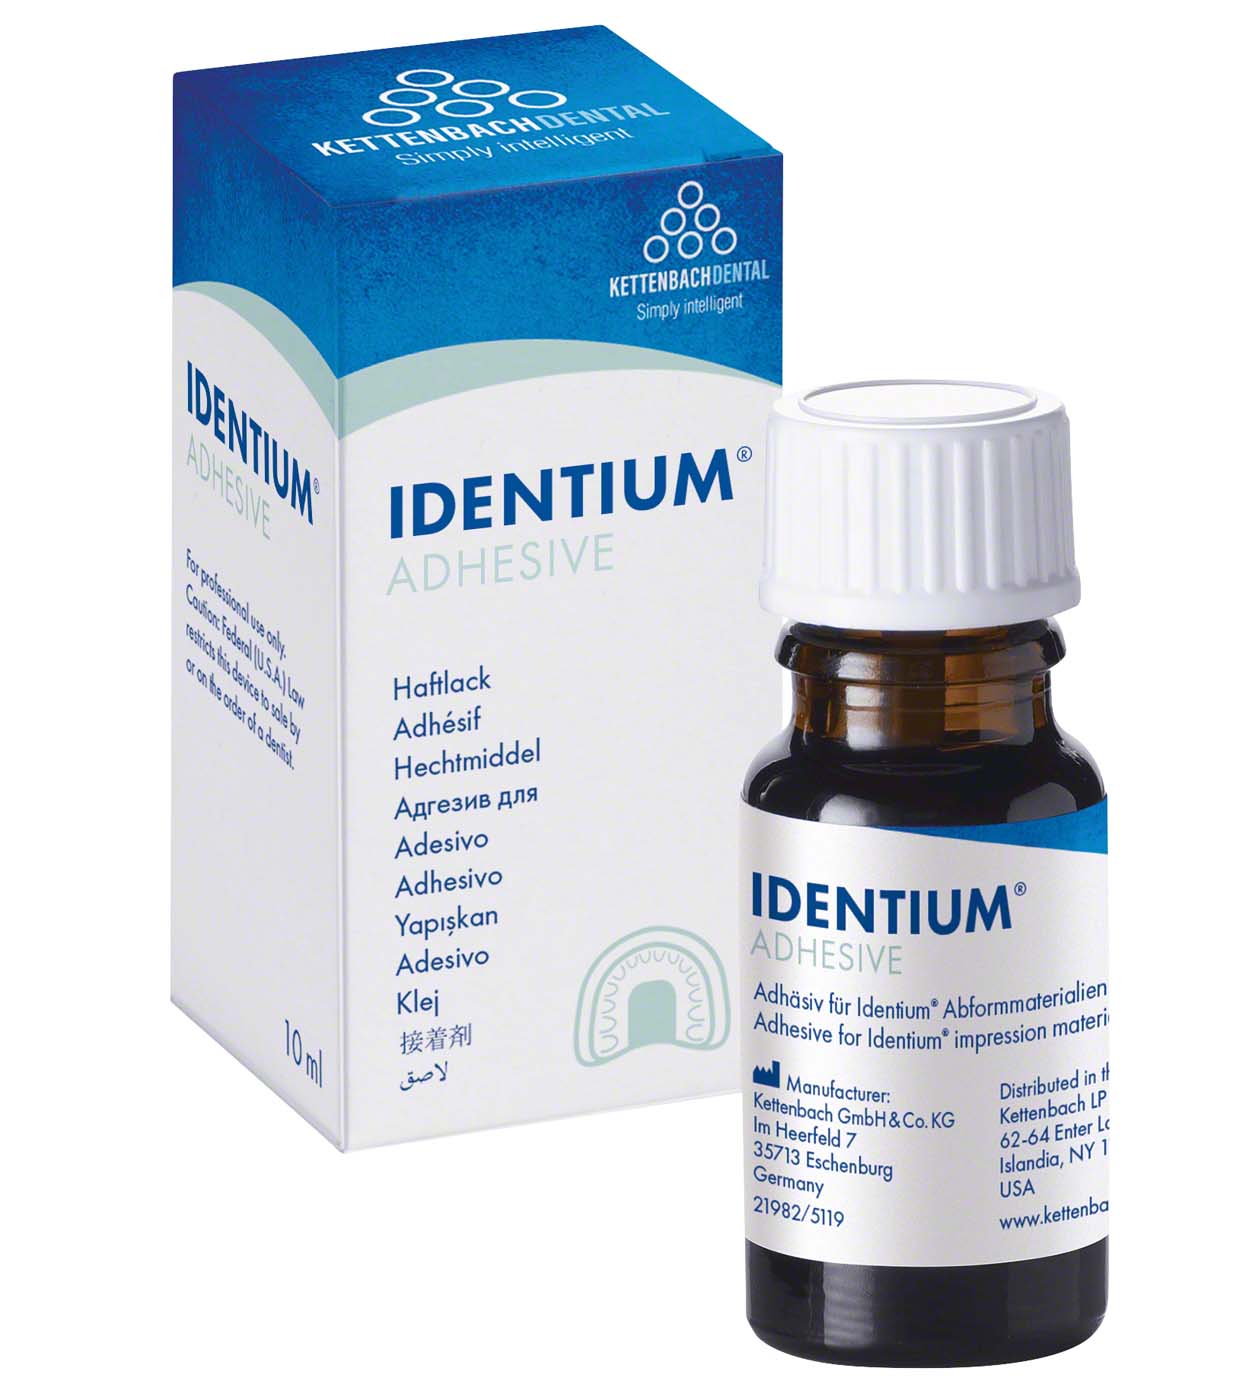 Identium® Adhesive Kettenbach Dental